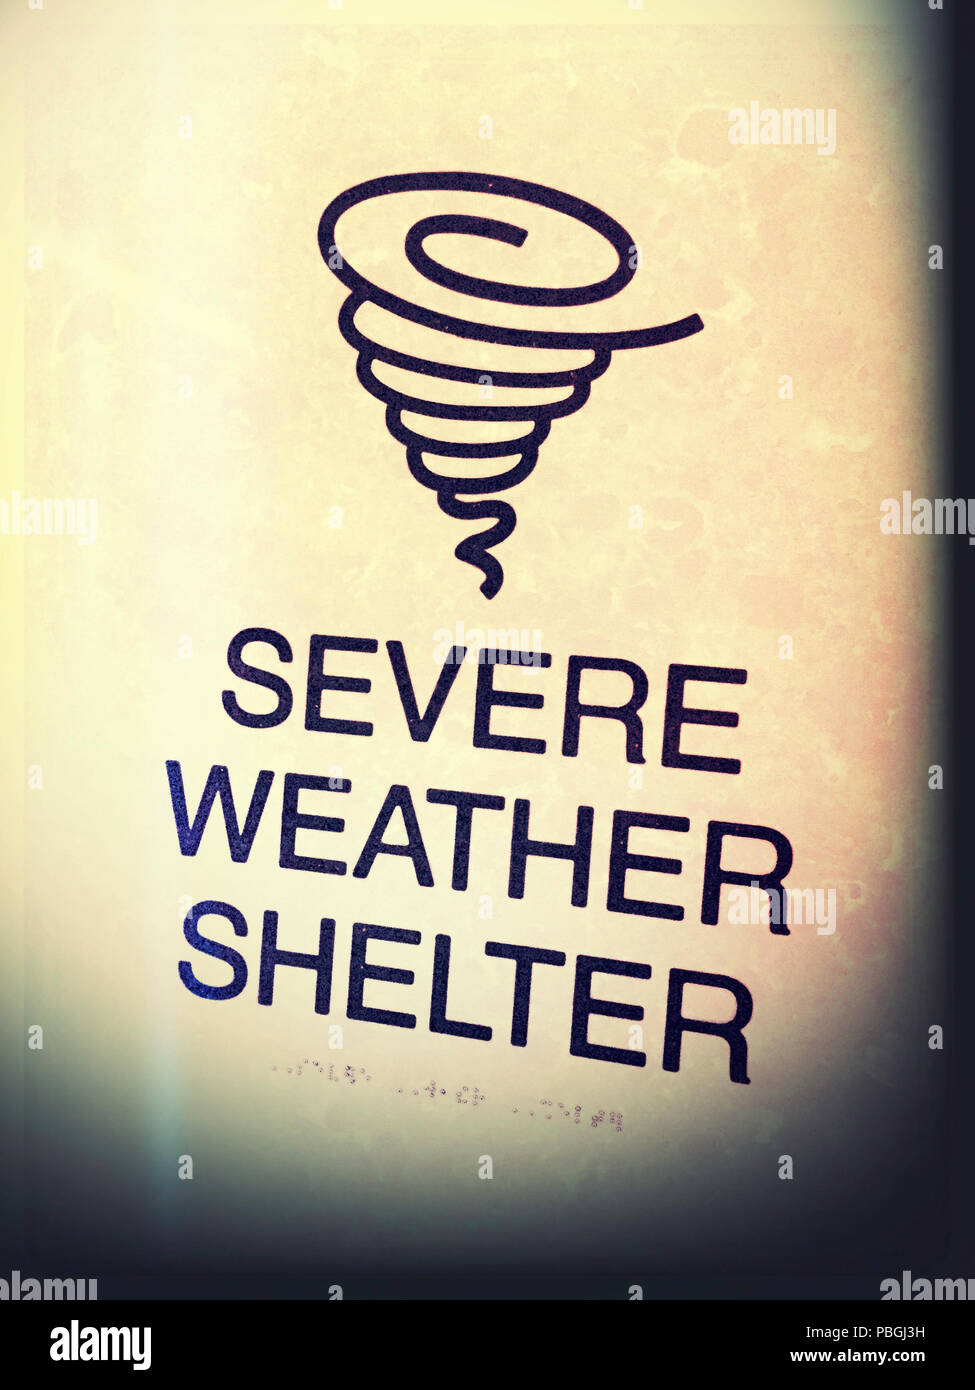 Severe Weather Shelter, USA Stock Photo